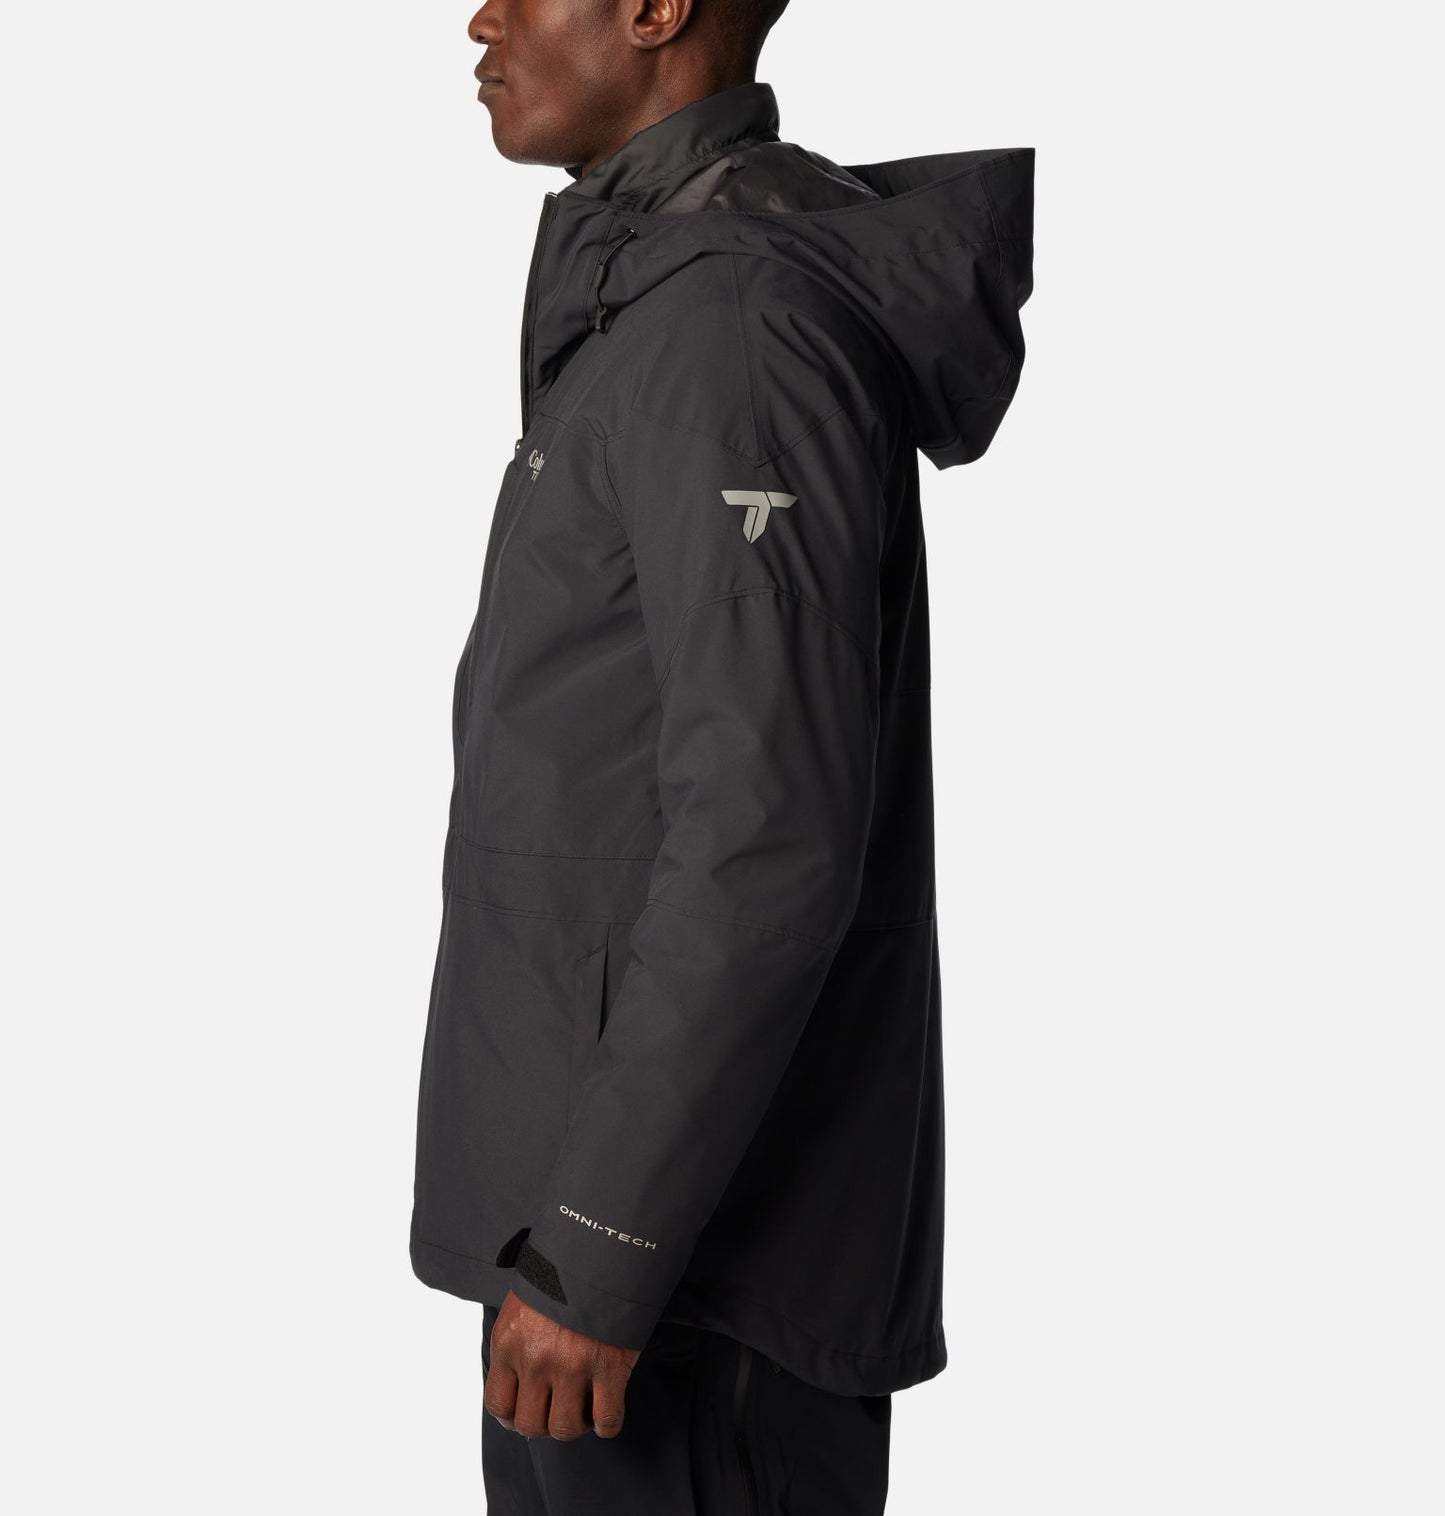 Men's Powder Canyon™ Interchange II Jacket